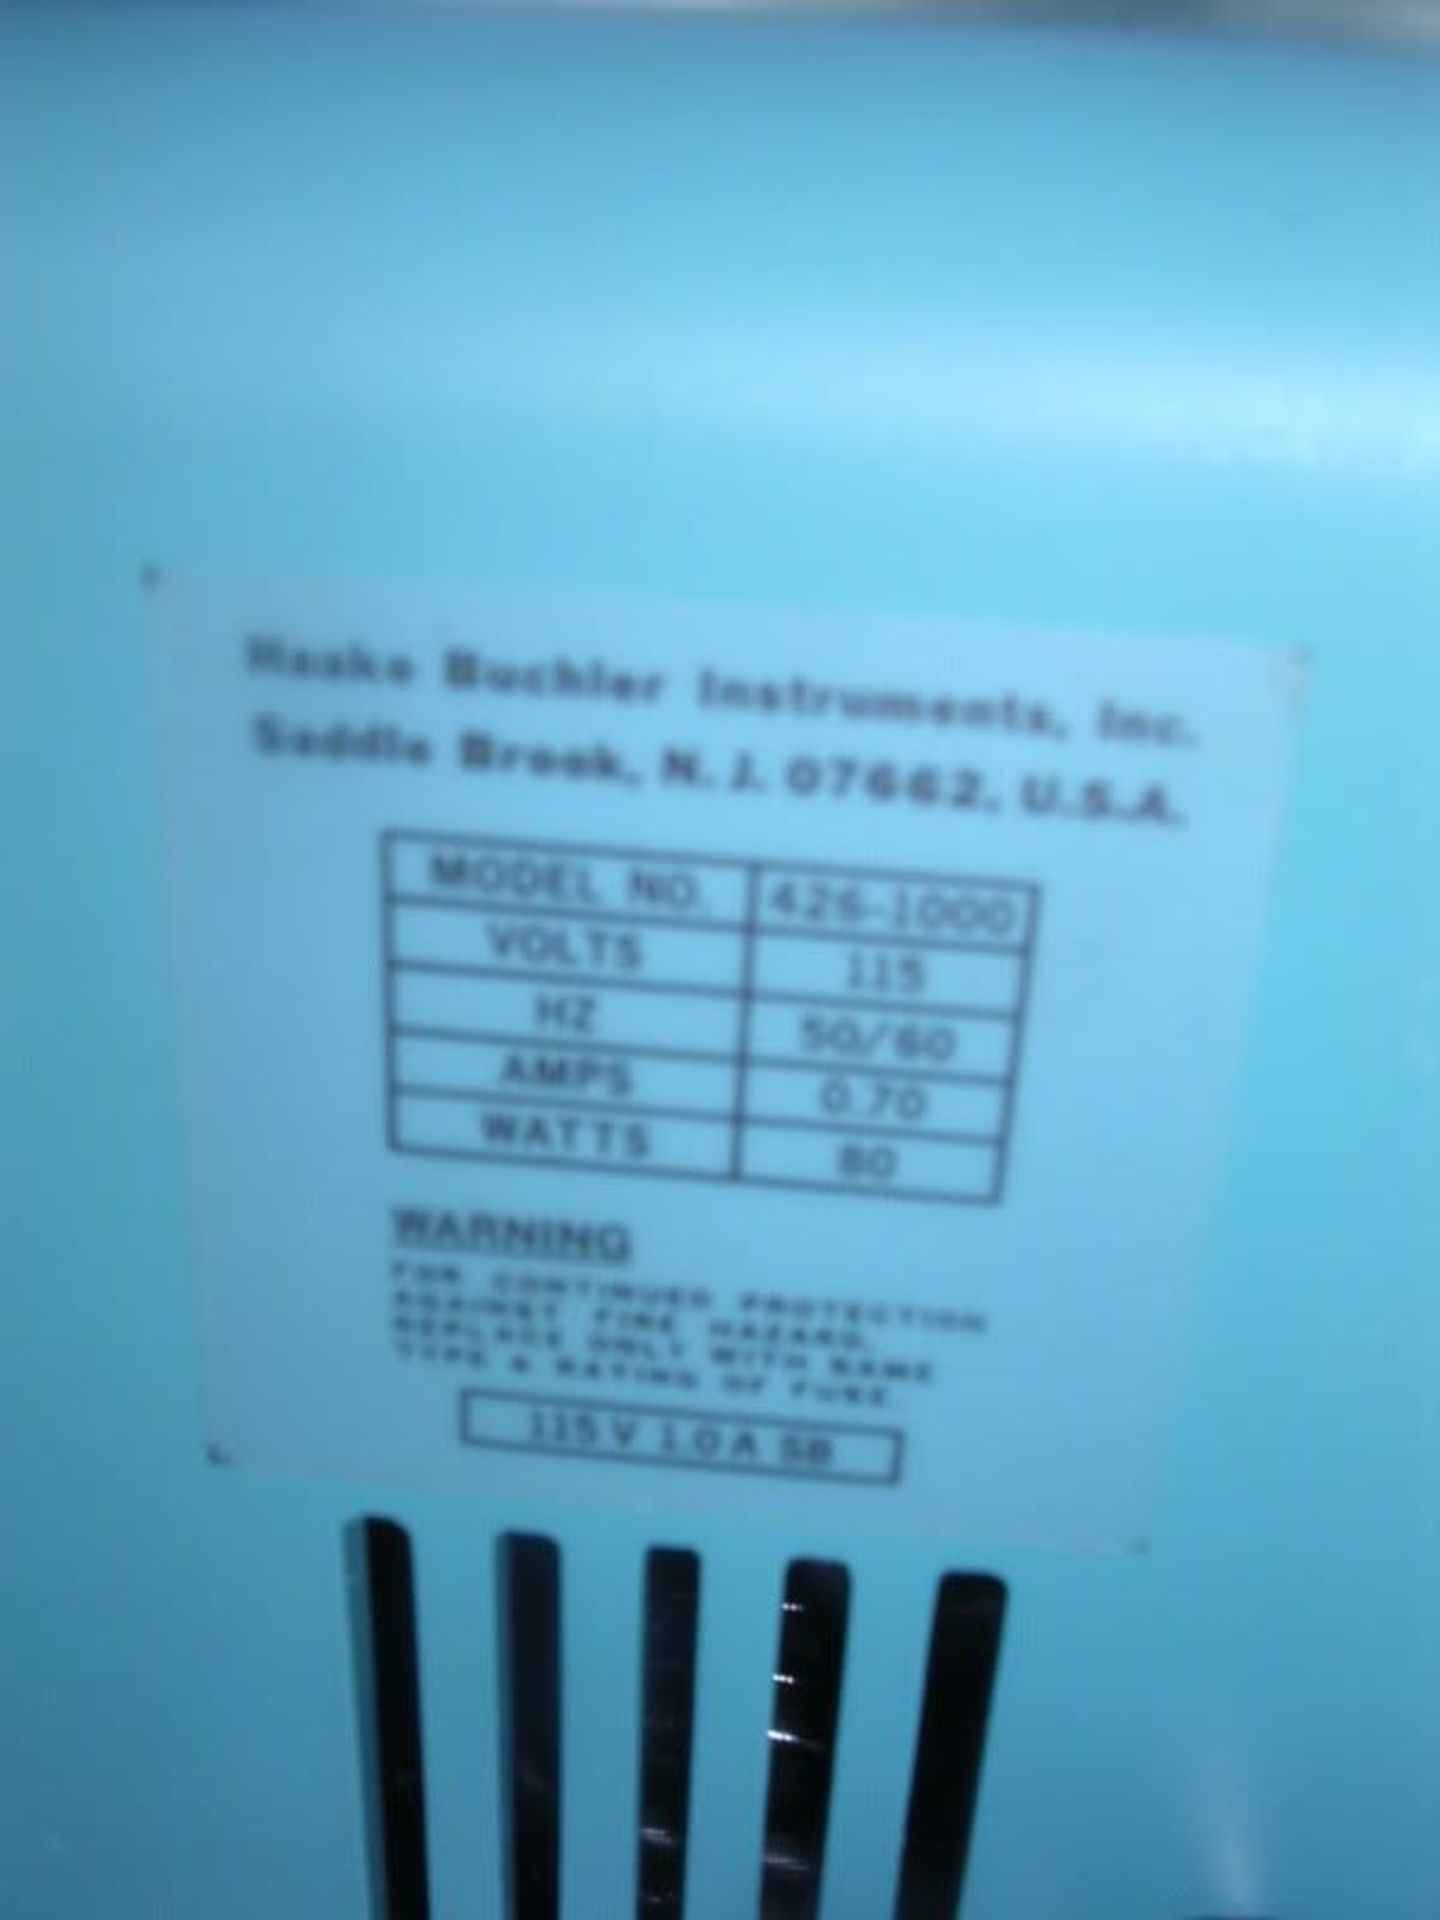 Haake Buchler Polystaltic Pump Model 426-1000 For / Rev, Qty 1, 222227663825 - Image 10 of 12